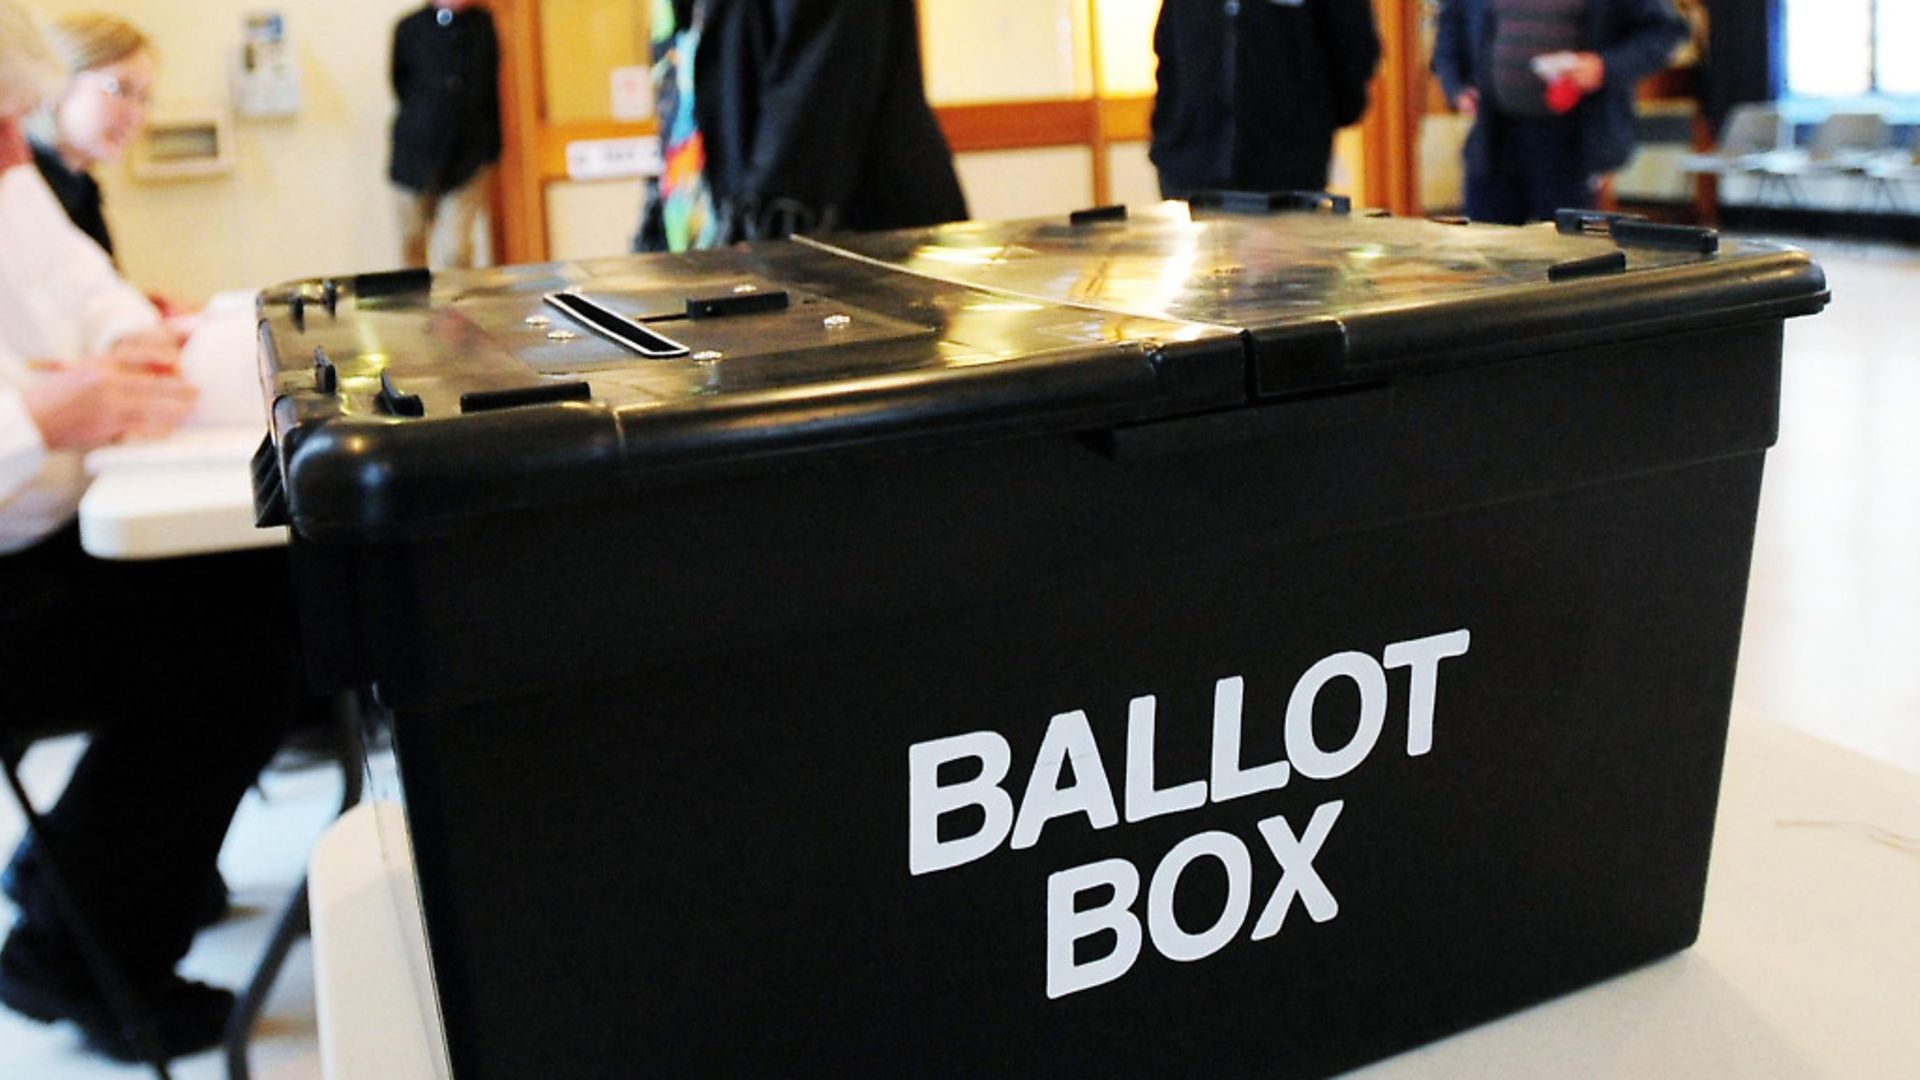 A ballot box during a UK election. Photograph: Rui Viera/PA - Credit: PA Archive/PA Images